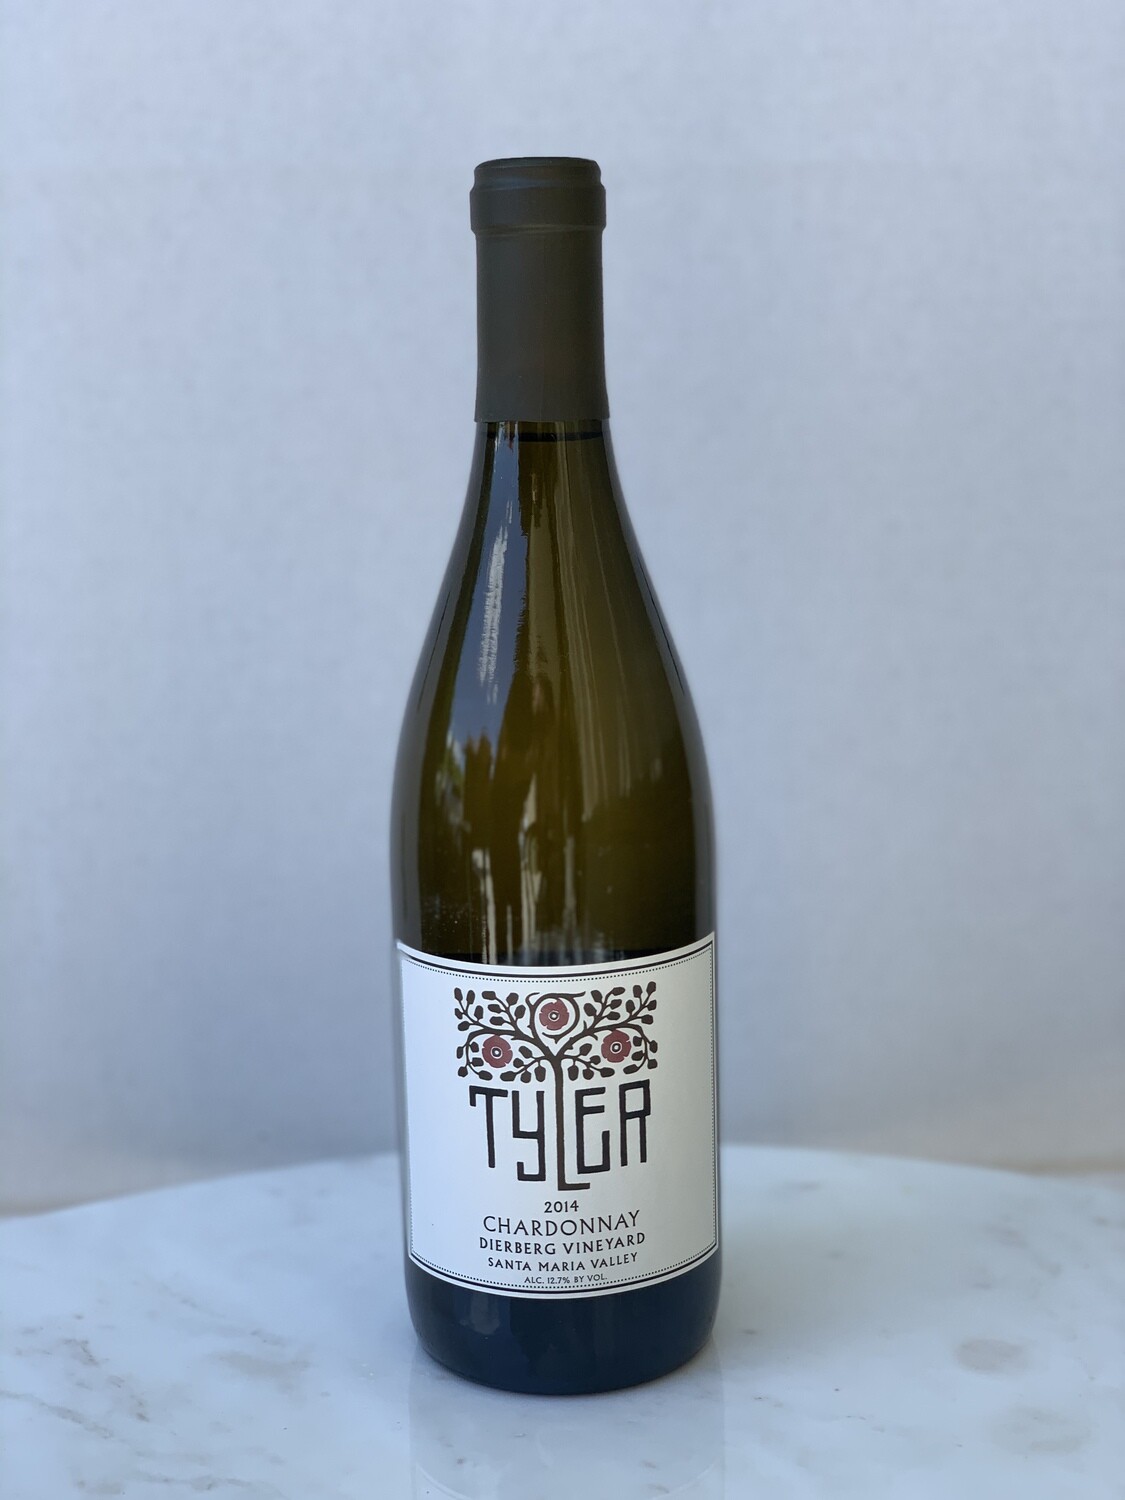 Tyler Dierberg Vineyard Santa Maria Valley Chardonnay 2014